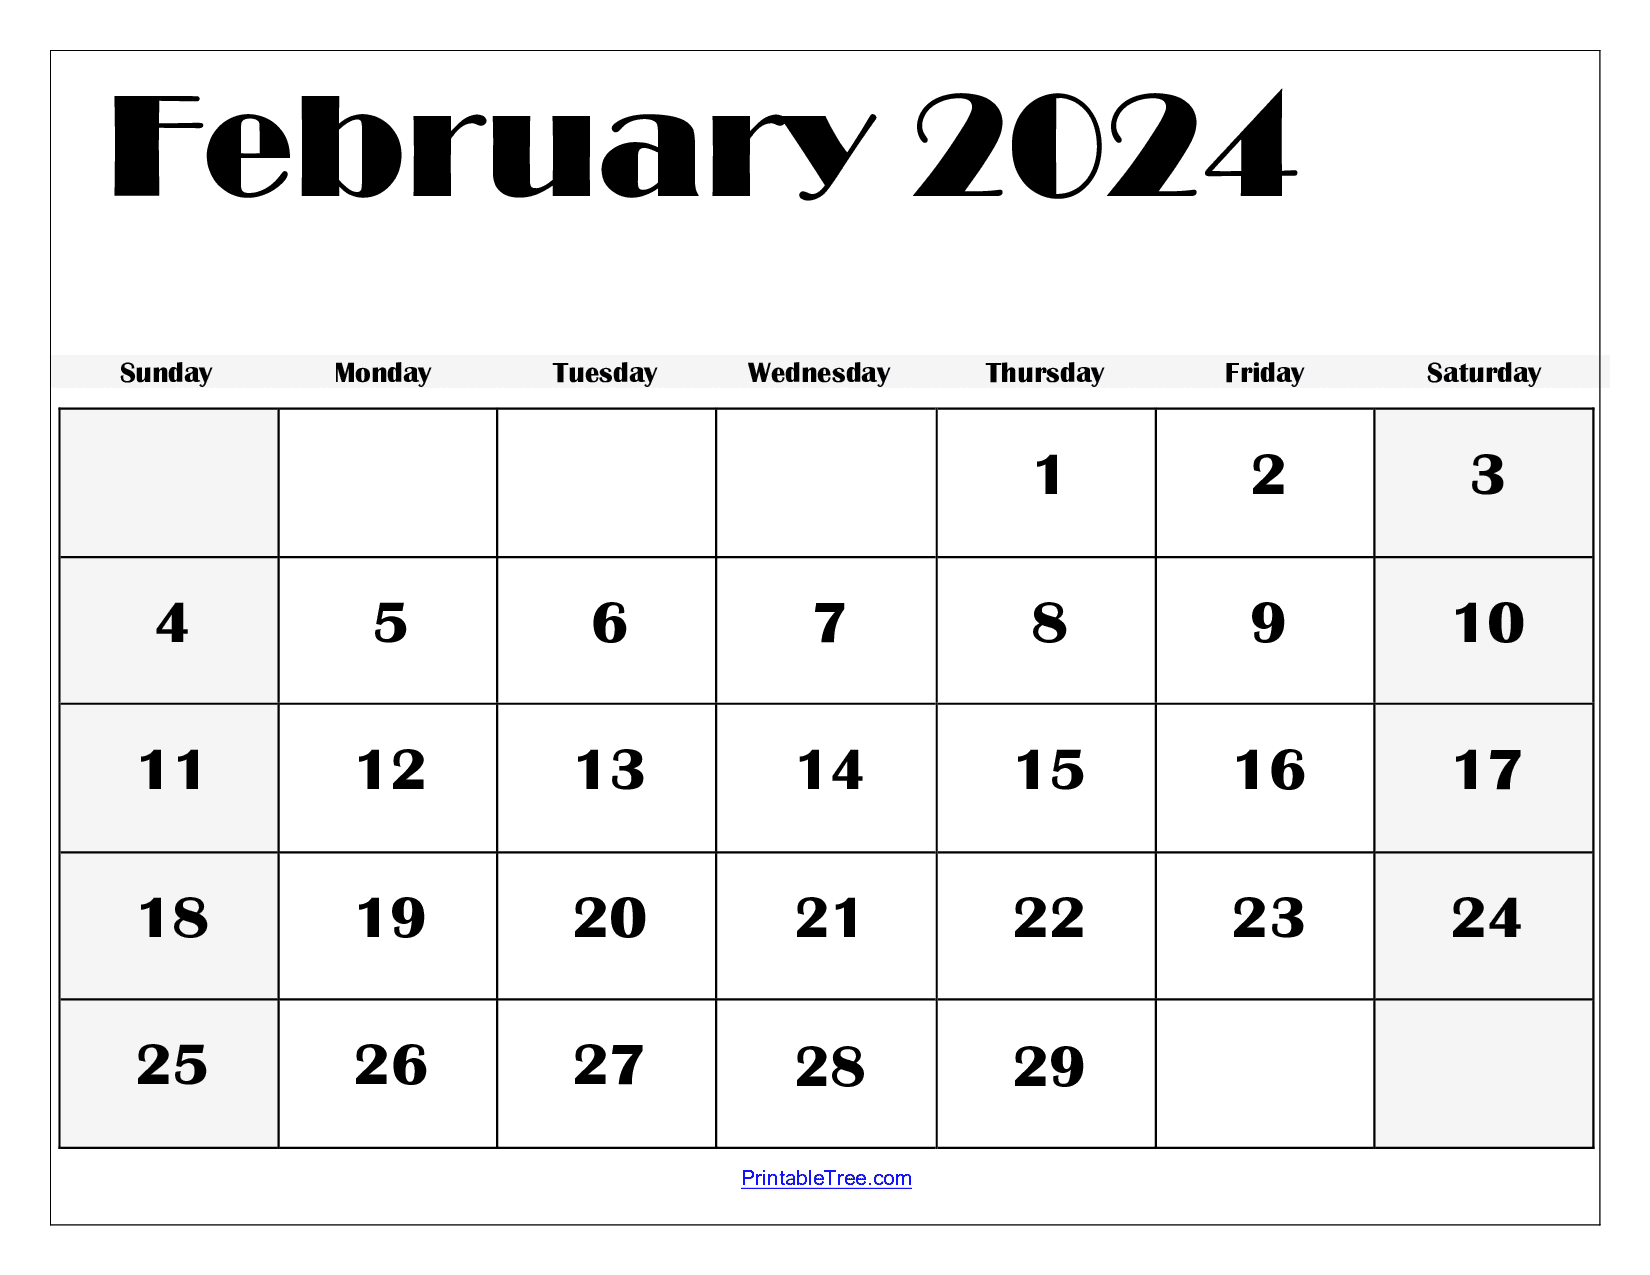 February 2024 Calendar Printable Pdf Template With Holidays for Feburary 2024 Calendar Printable